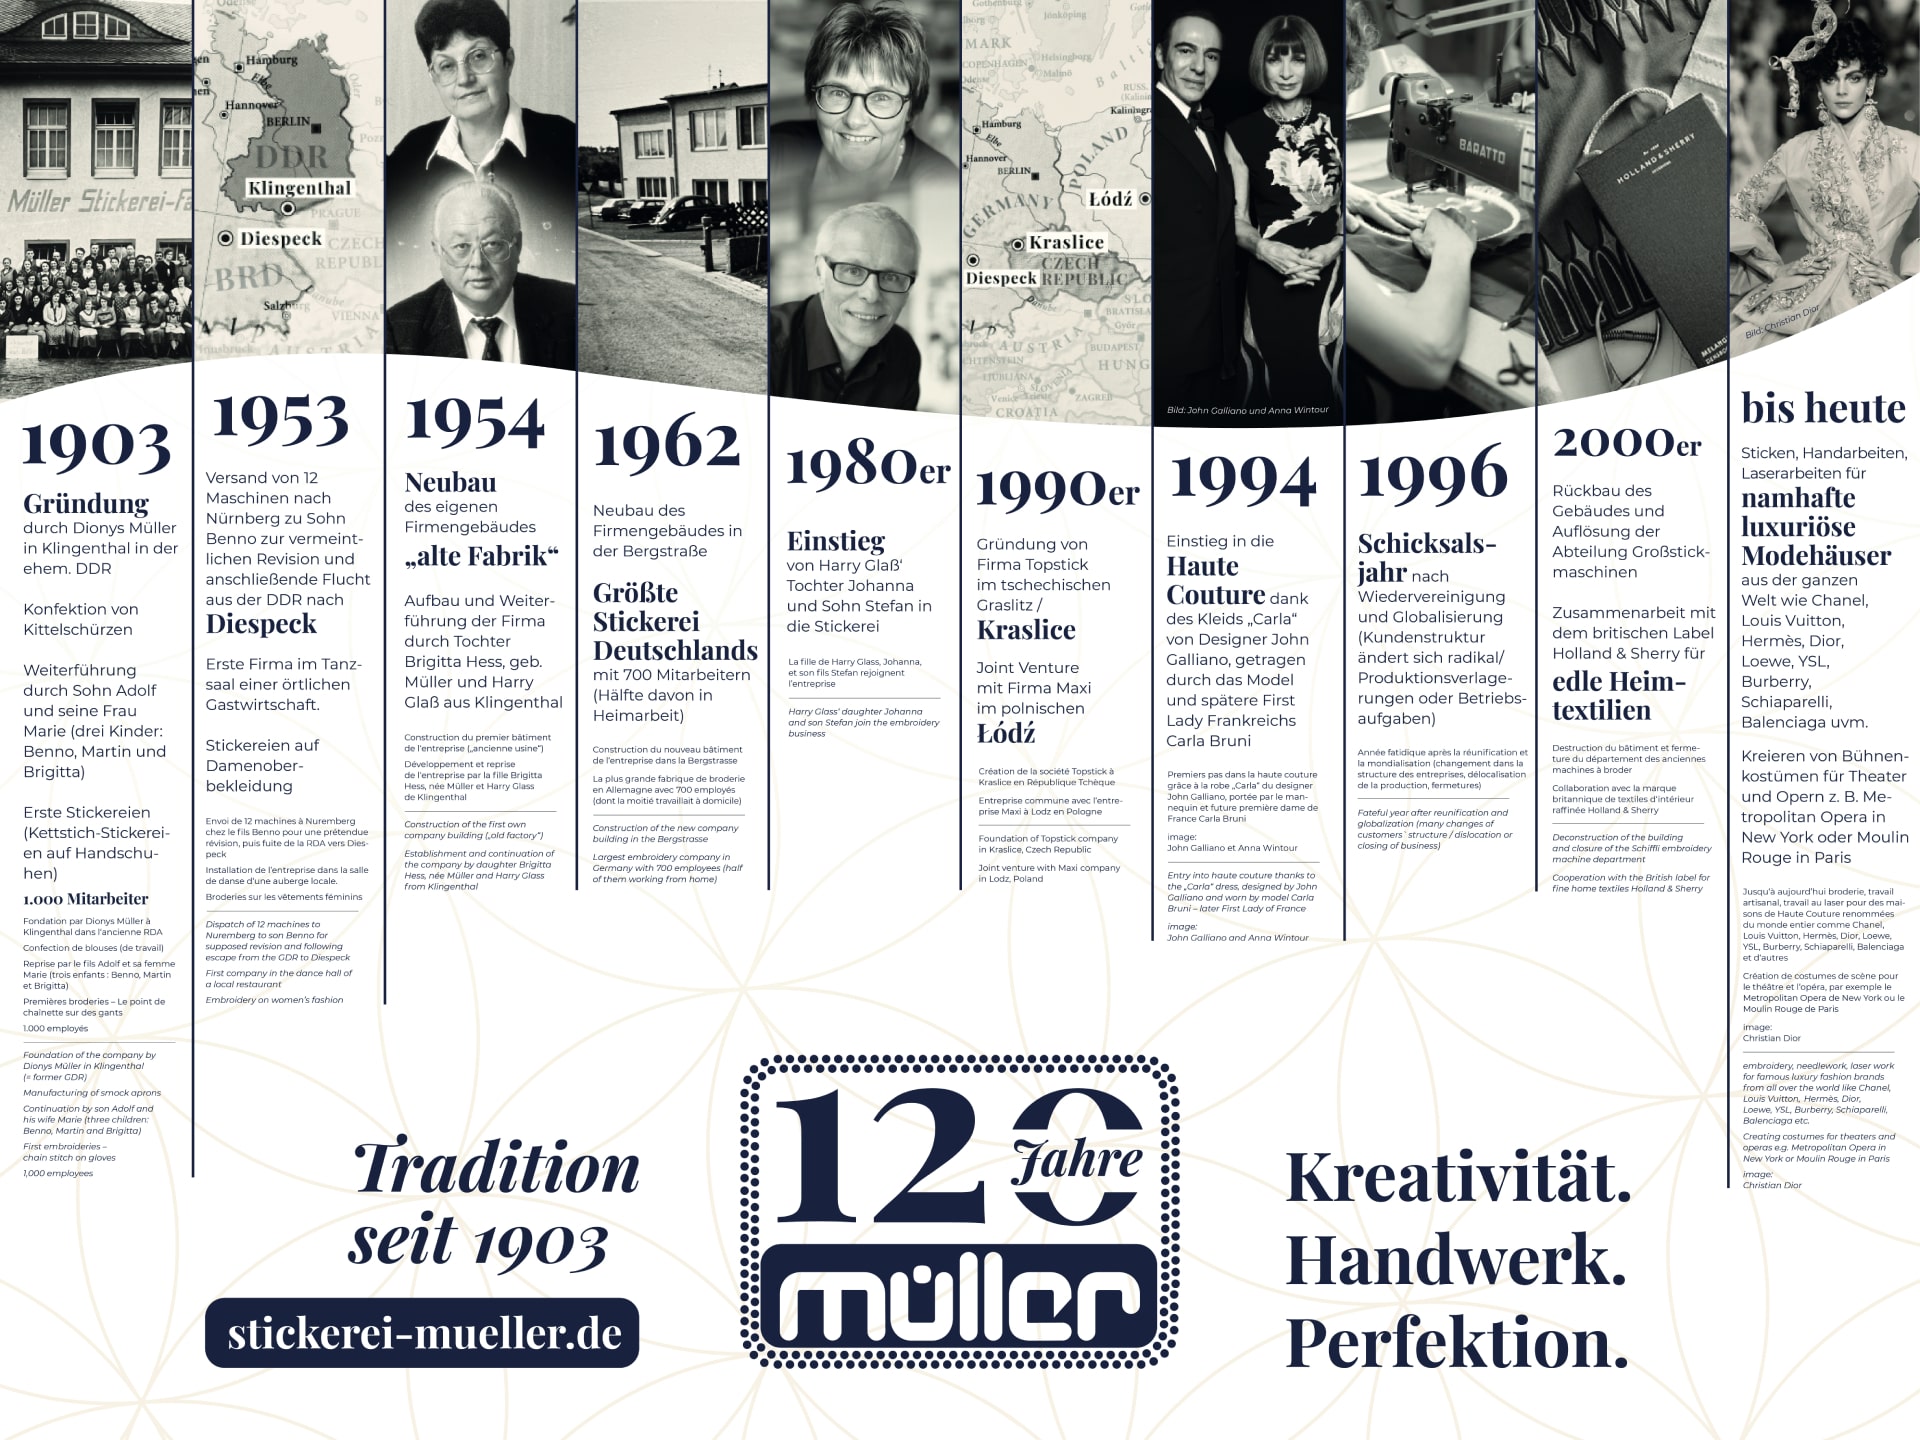 Firmengeschichte der Stickerei Müller GmbH